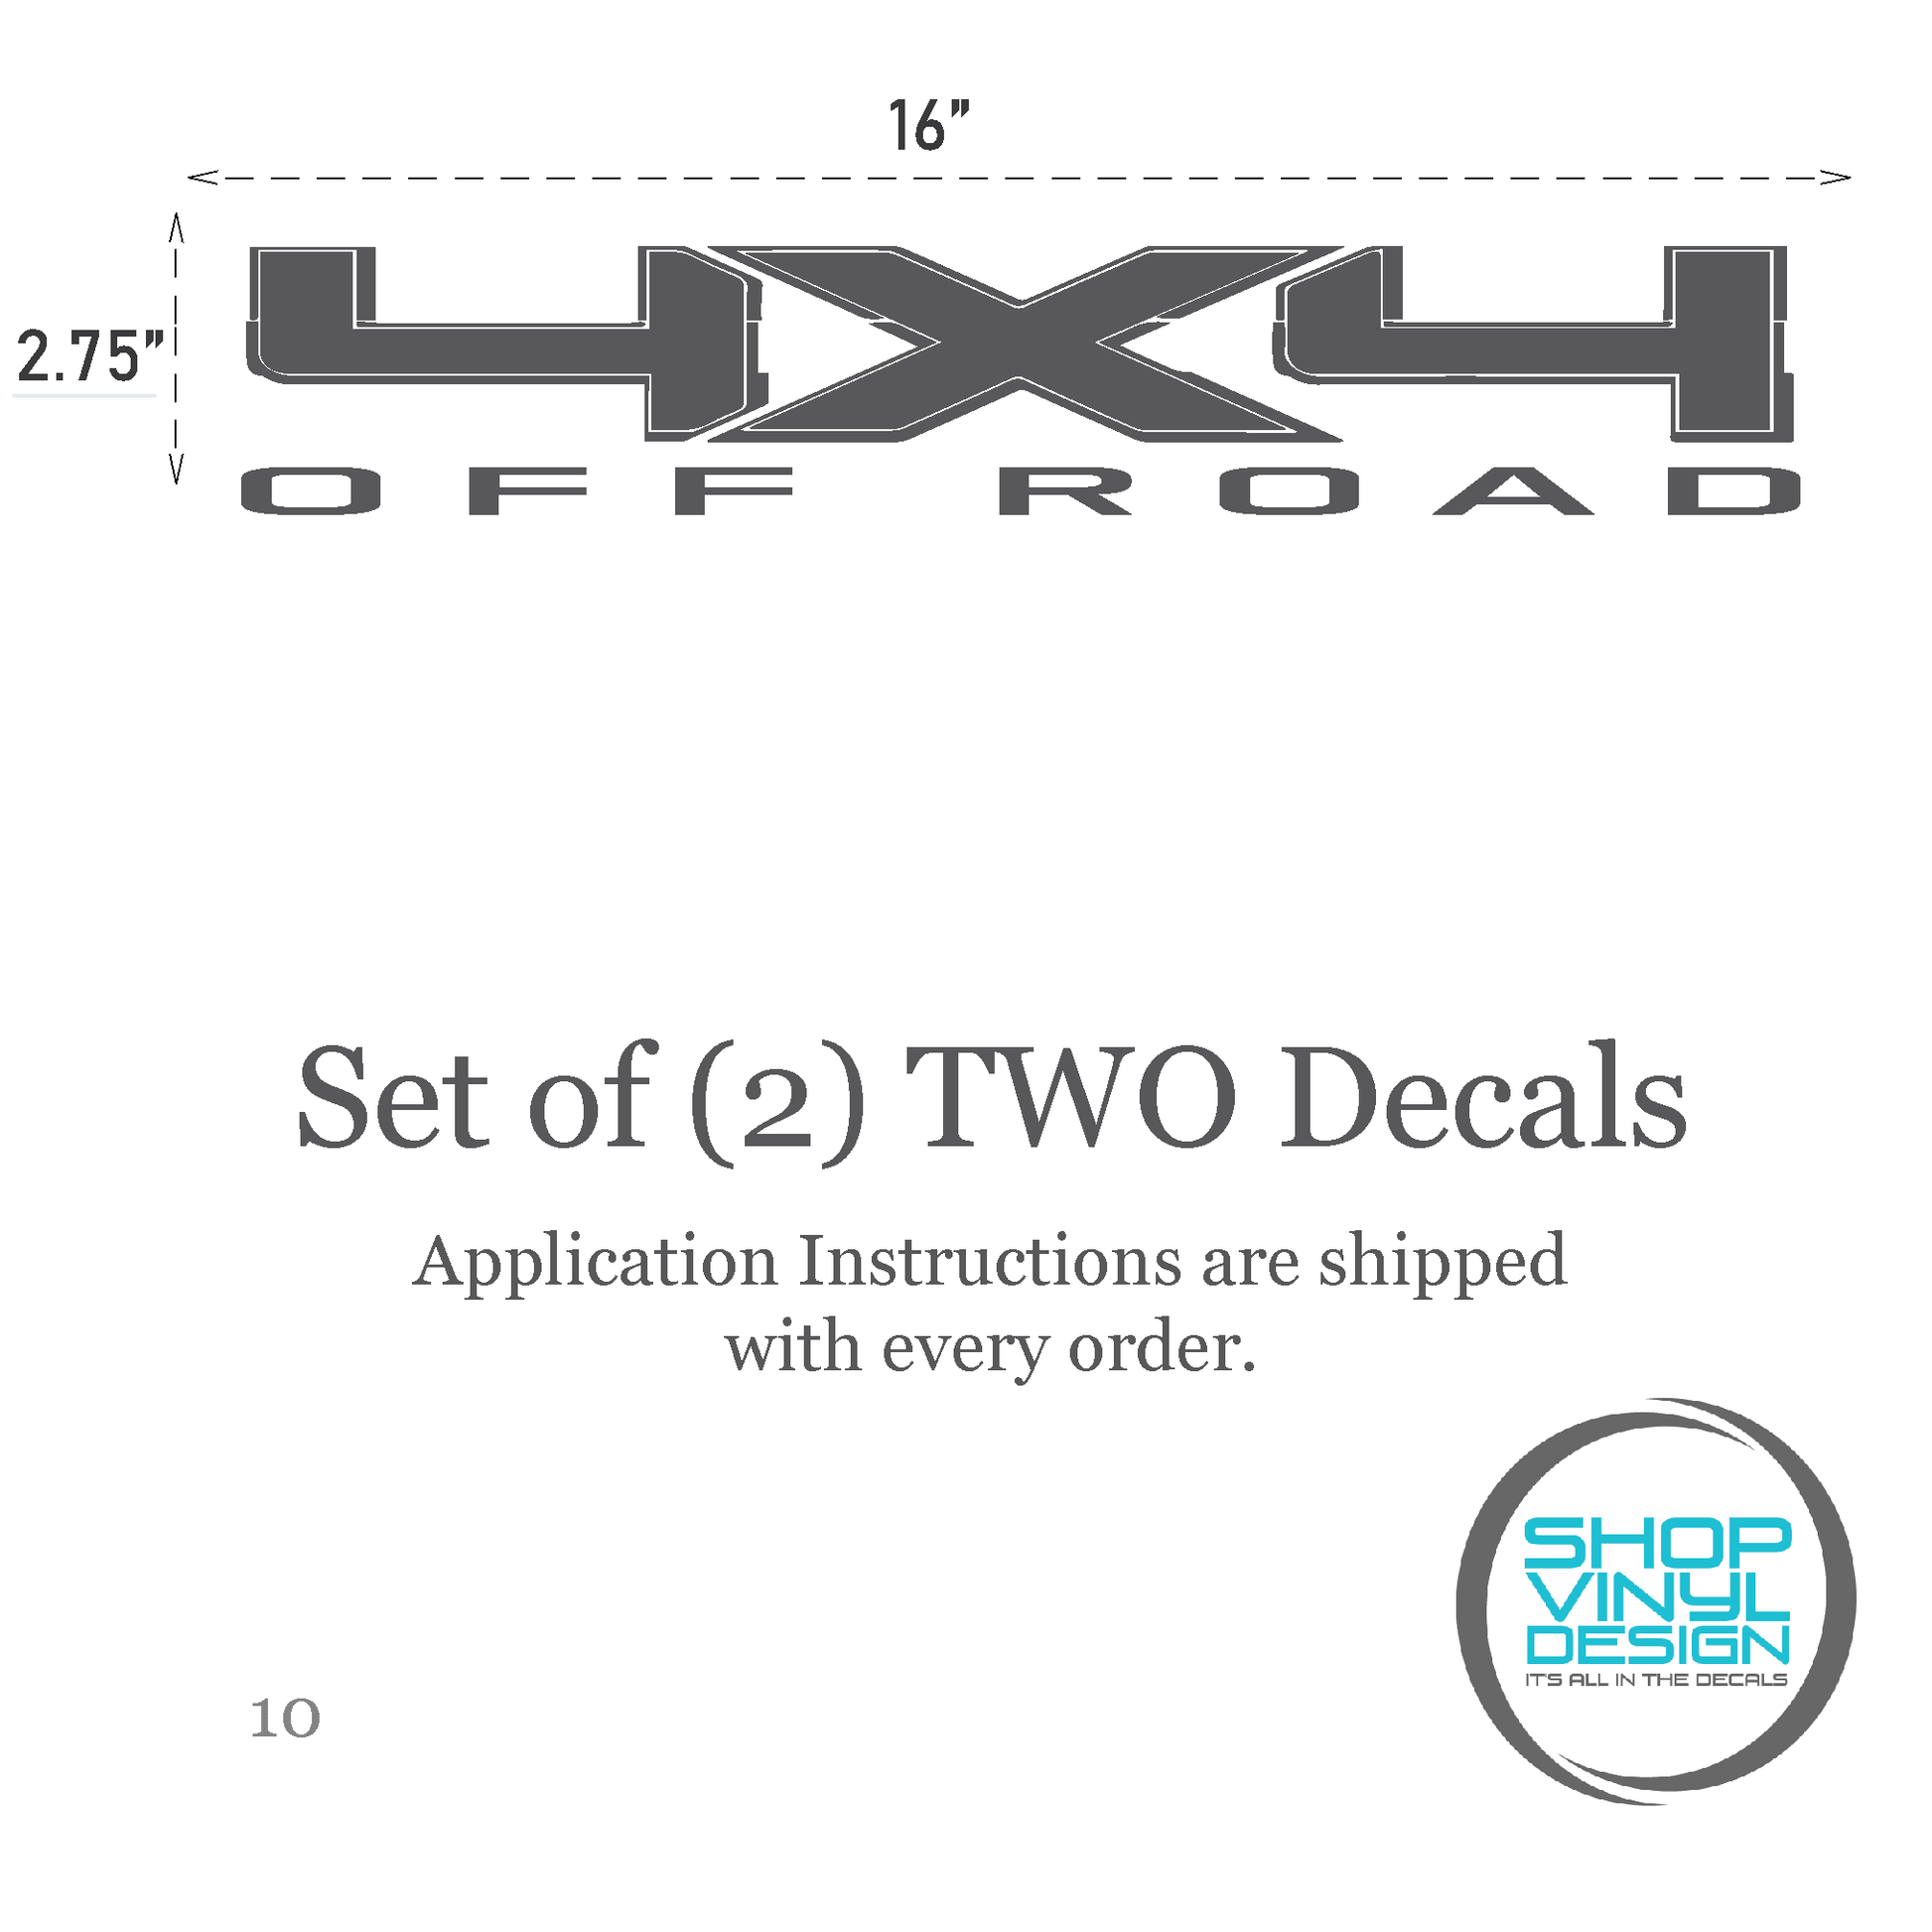 Shop Vinyl Design F-150 F-250 Trucks 4 x 4 Off Road Replacement Bedside Decals #10 Vehicle decal 001 Shop Vinyl Design decals stickers